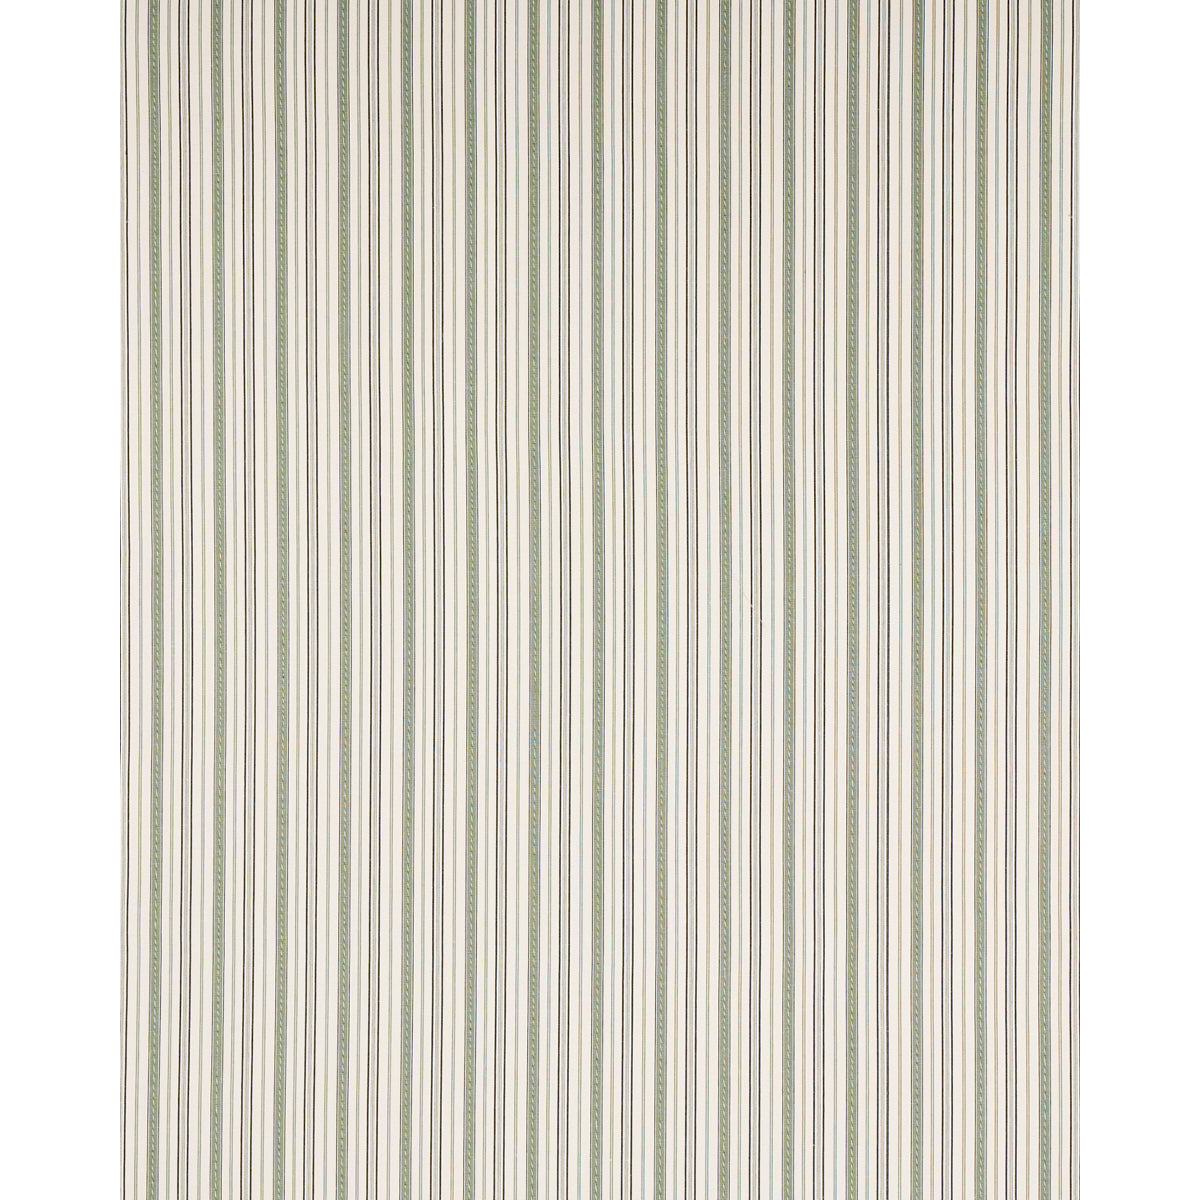 Purchase 81442 Lightfoot Stripe, Moss by Schumacher Fabric 1